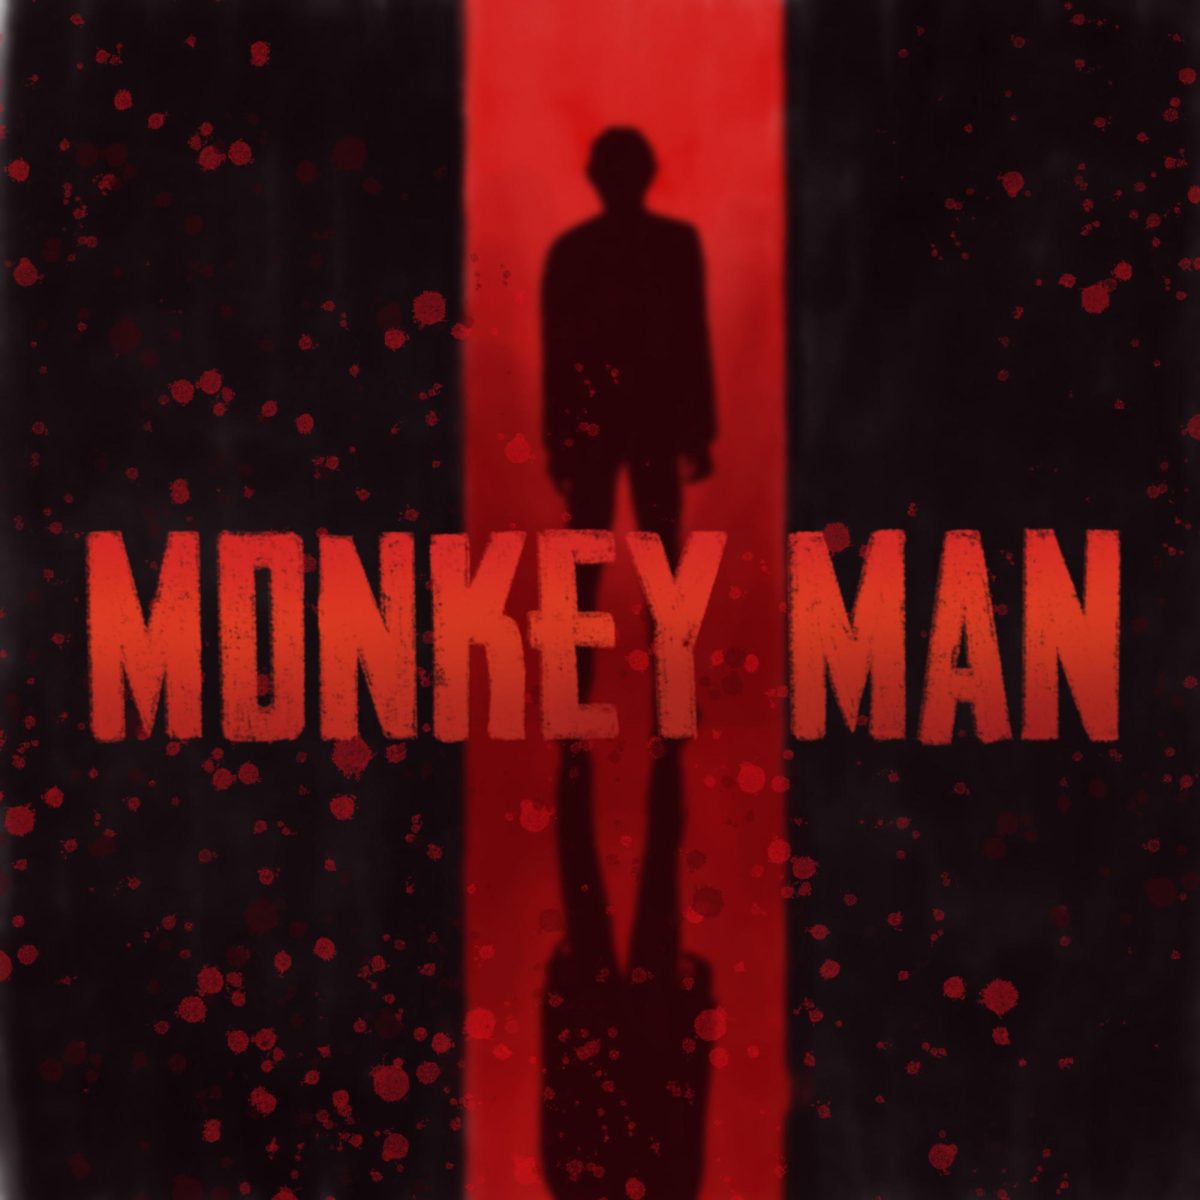 ‘Monkey Man’: Dirty, grim and intense